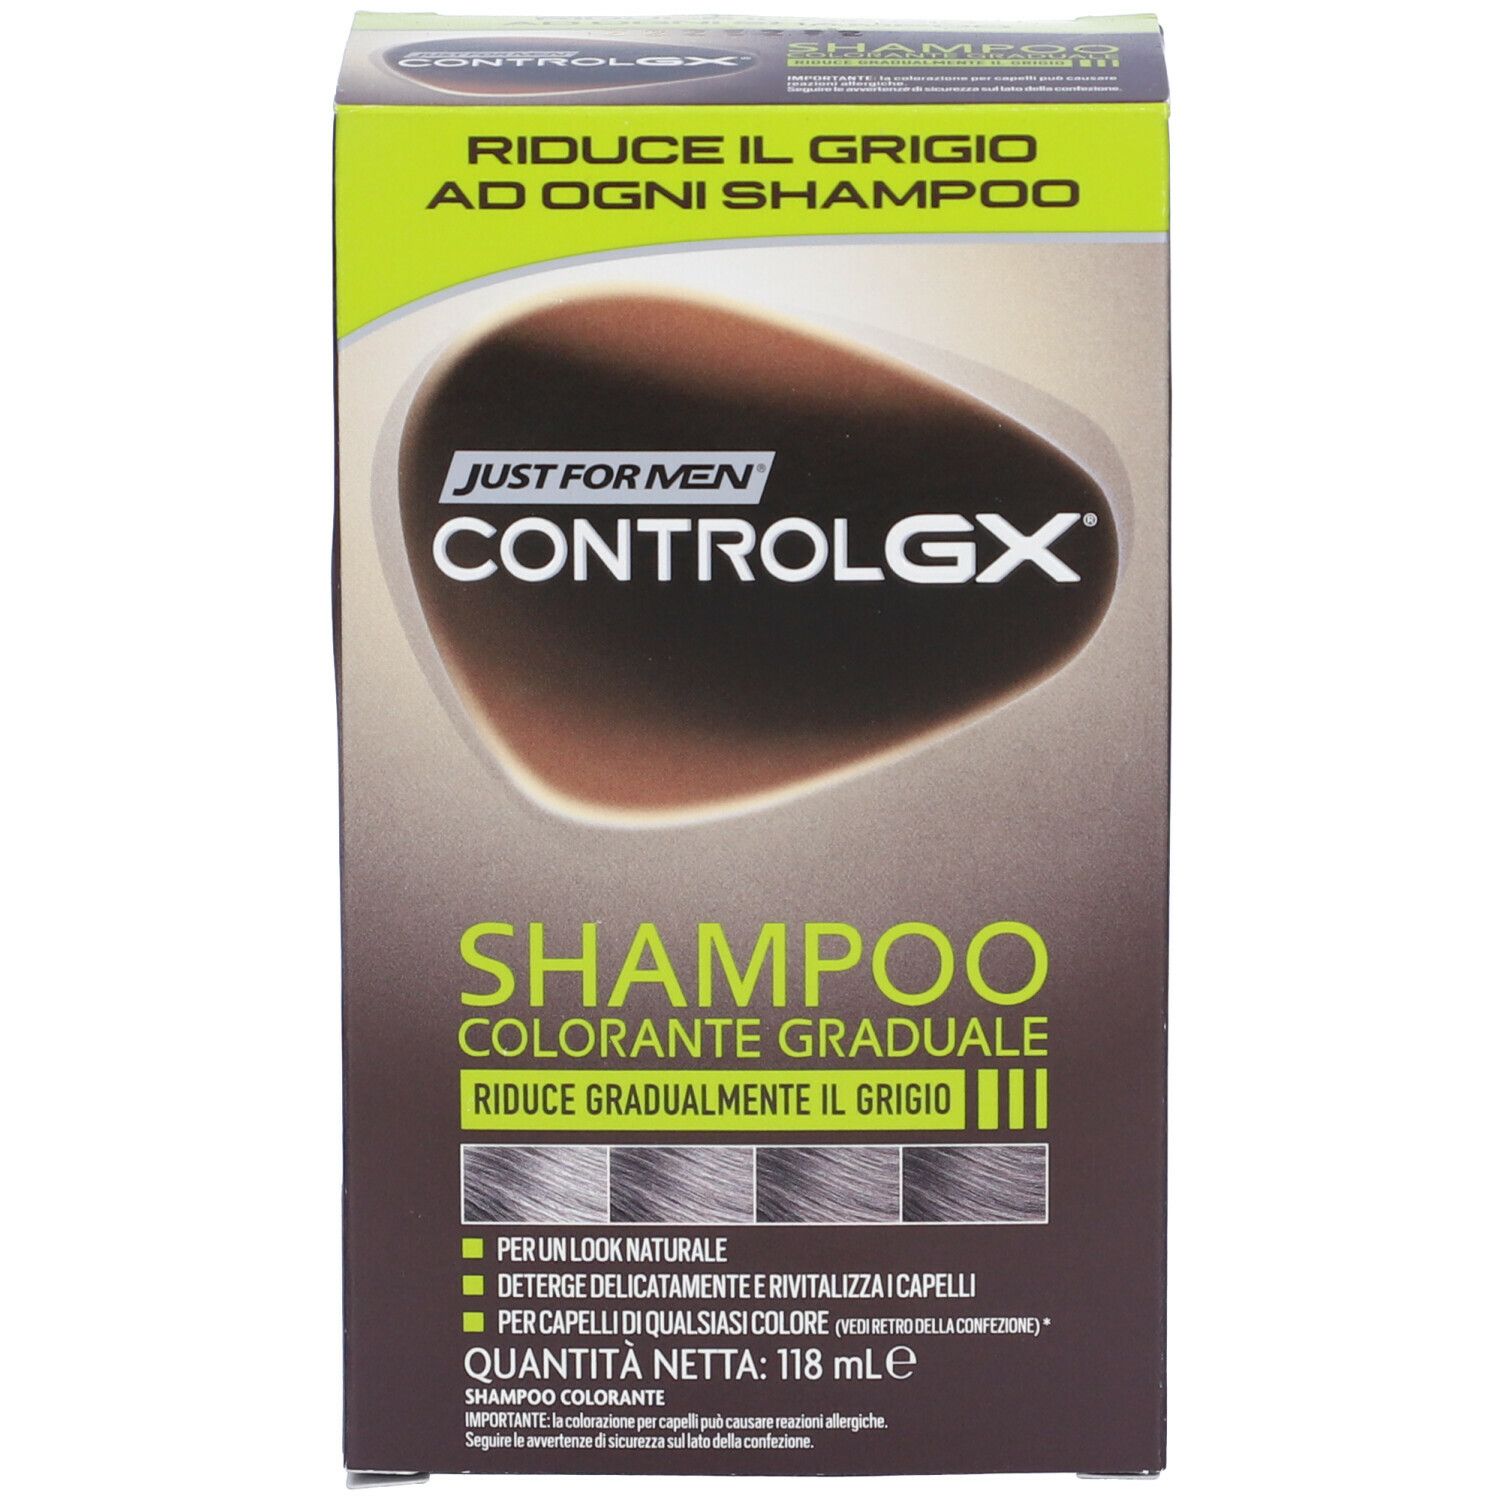 Just For Men Controlgx Shampoo Colorante Graduale